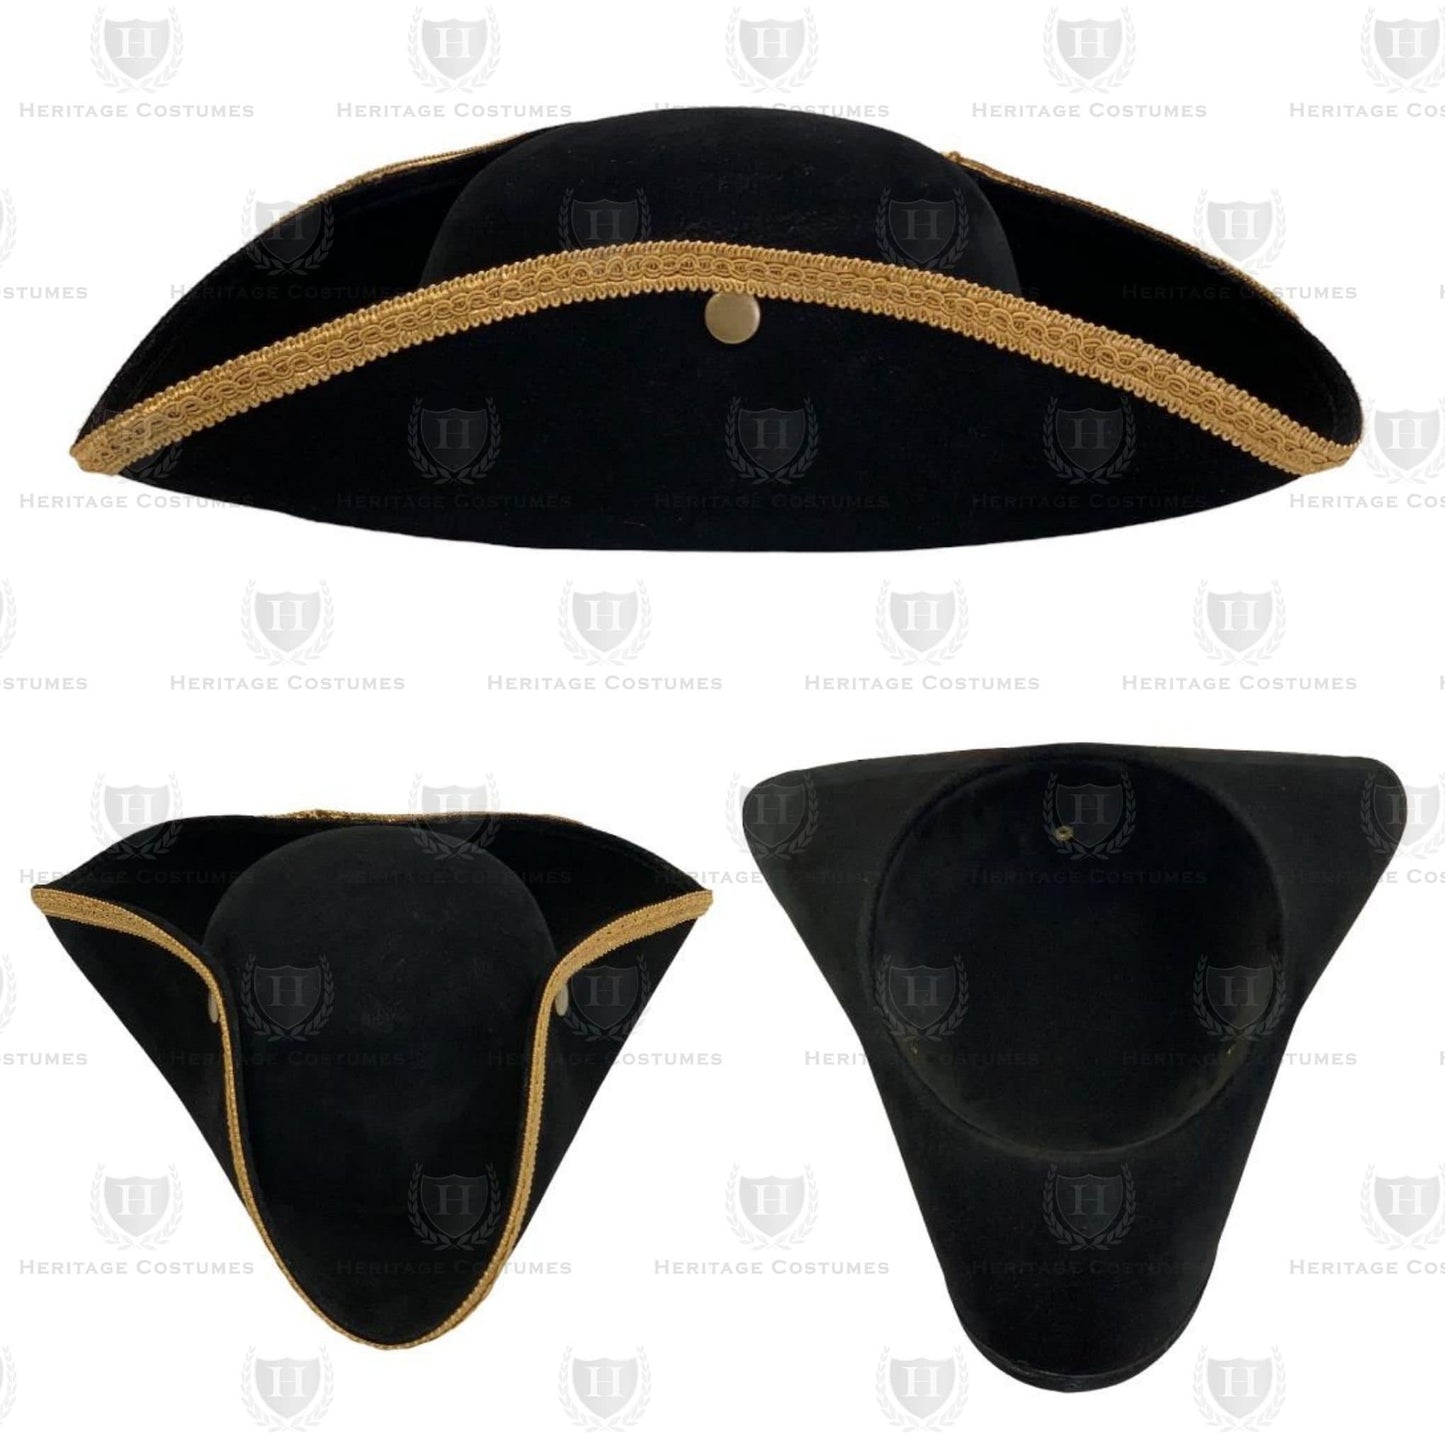 Colonial Tri-corner Hat (Black, W/Gold Braid Trim, W/ White Trim, or Brown)